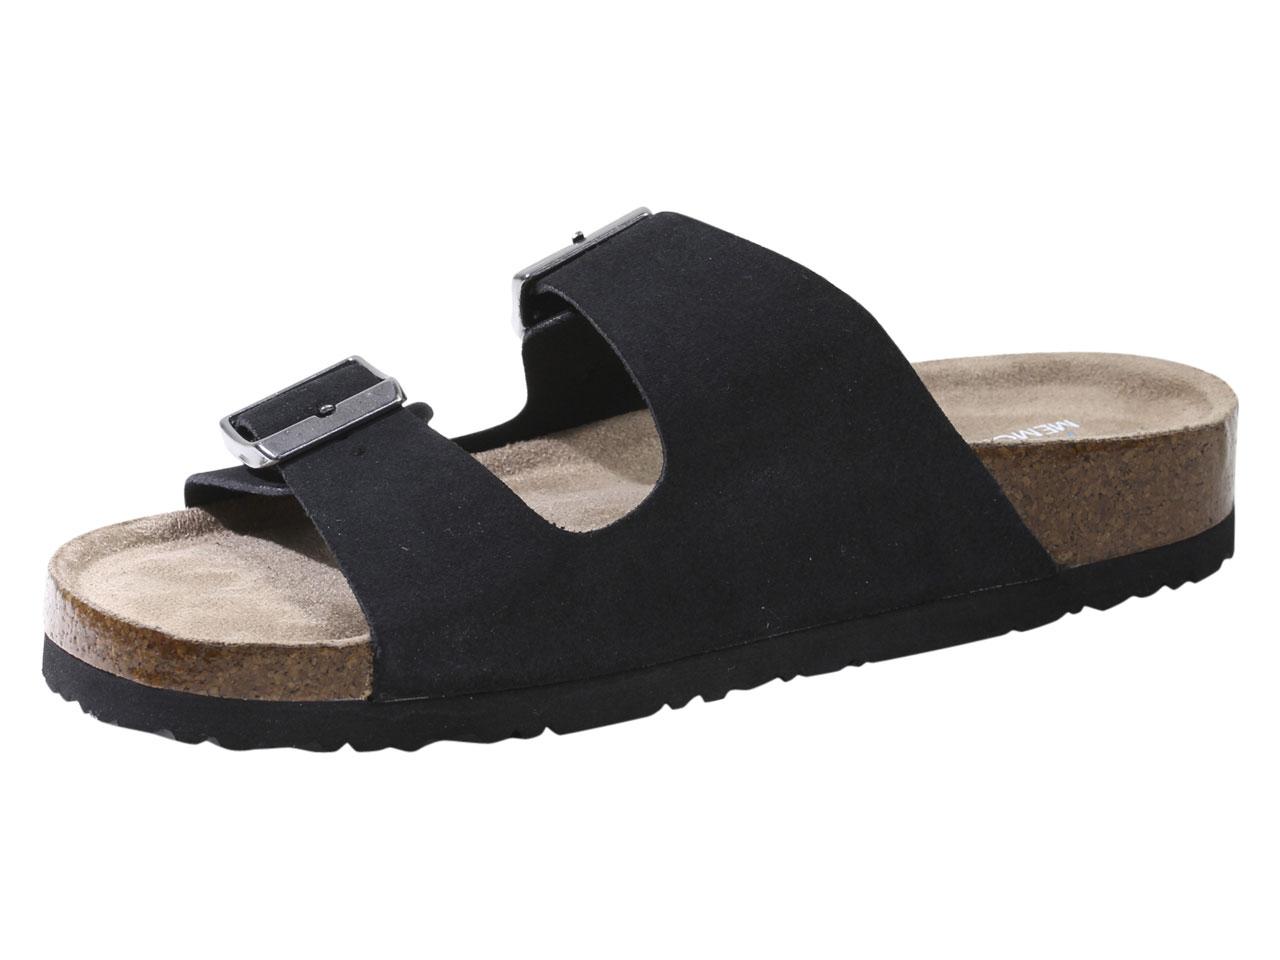 skechers sandals with memory foam